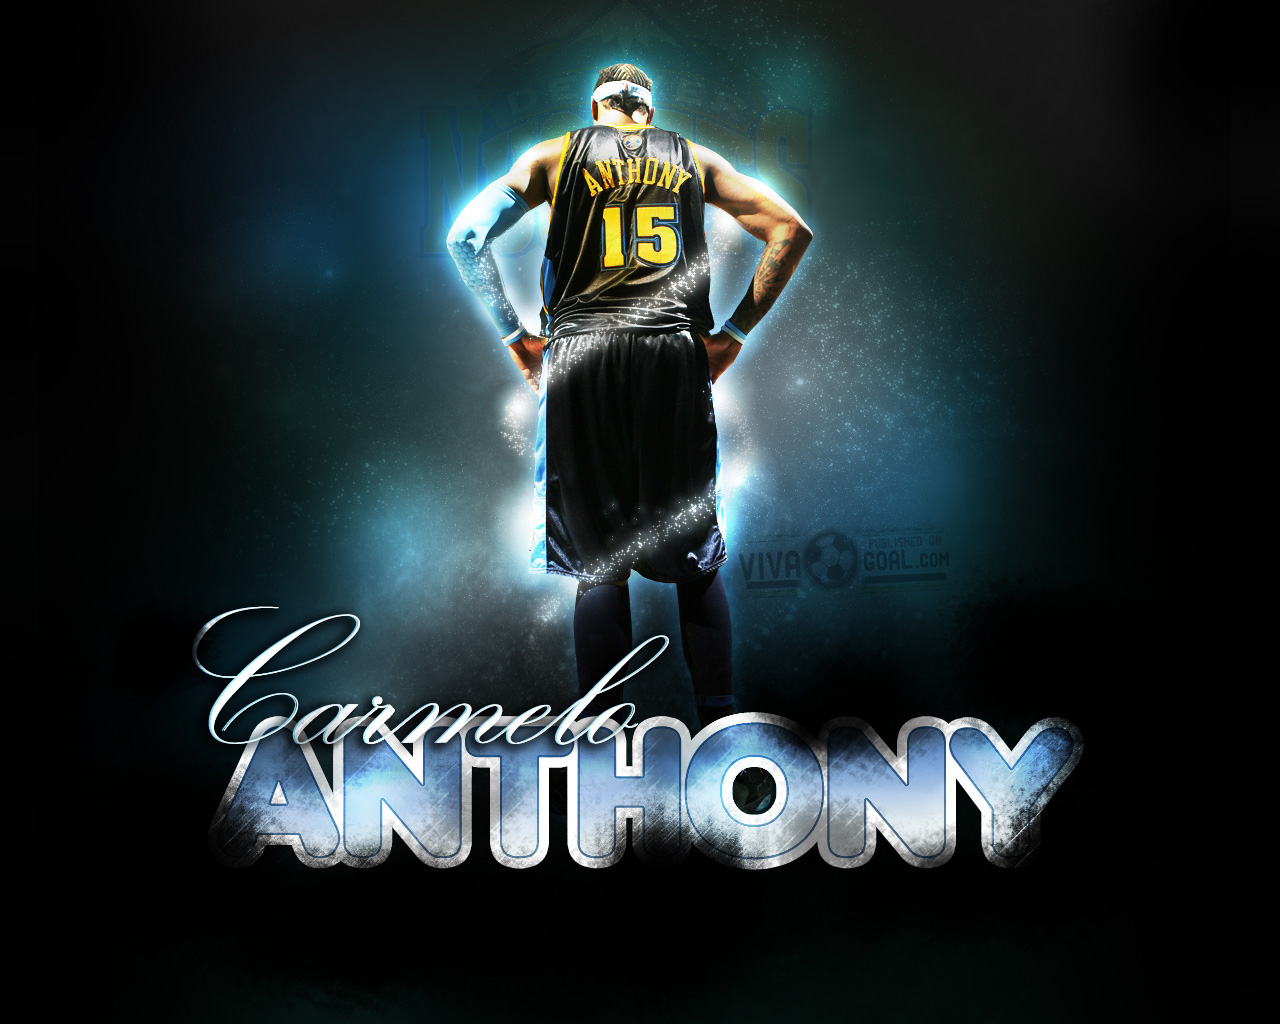 Carmelo Anthony Basketball Wallpaper